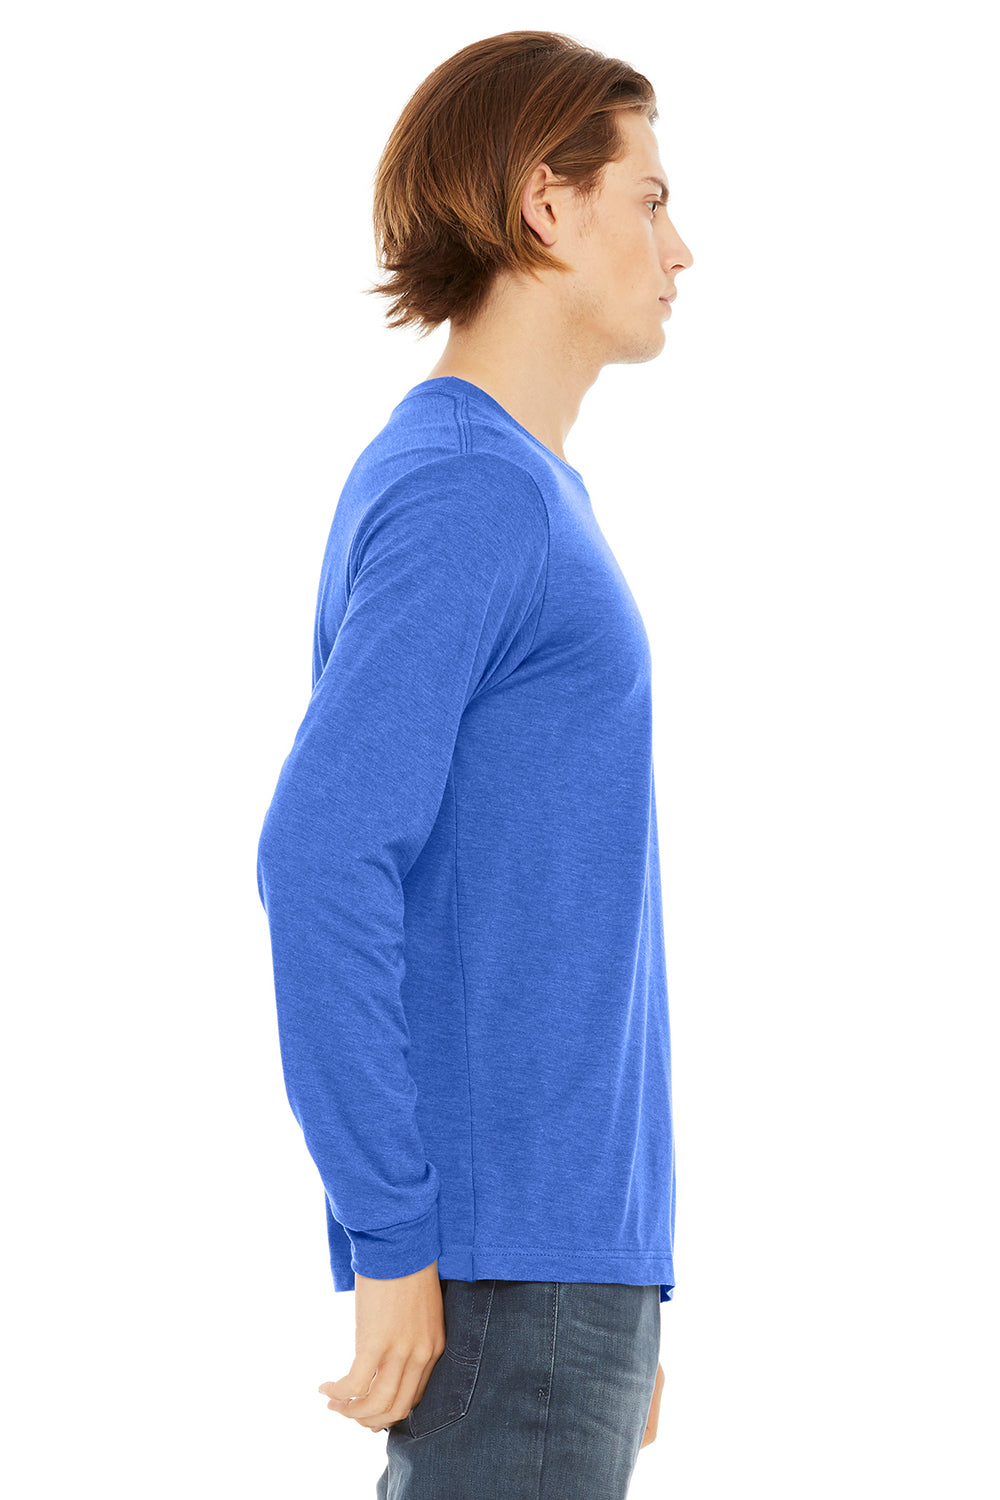 Bella + Canvas BC3501/3501 Mens Jersey Long Sleeve Crewneck T-Shirt True Royal Blue Triblend Model Side